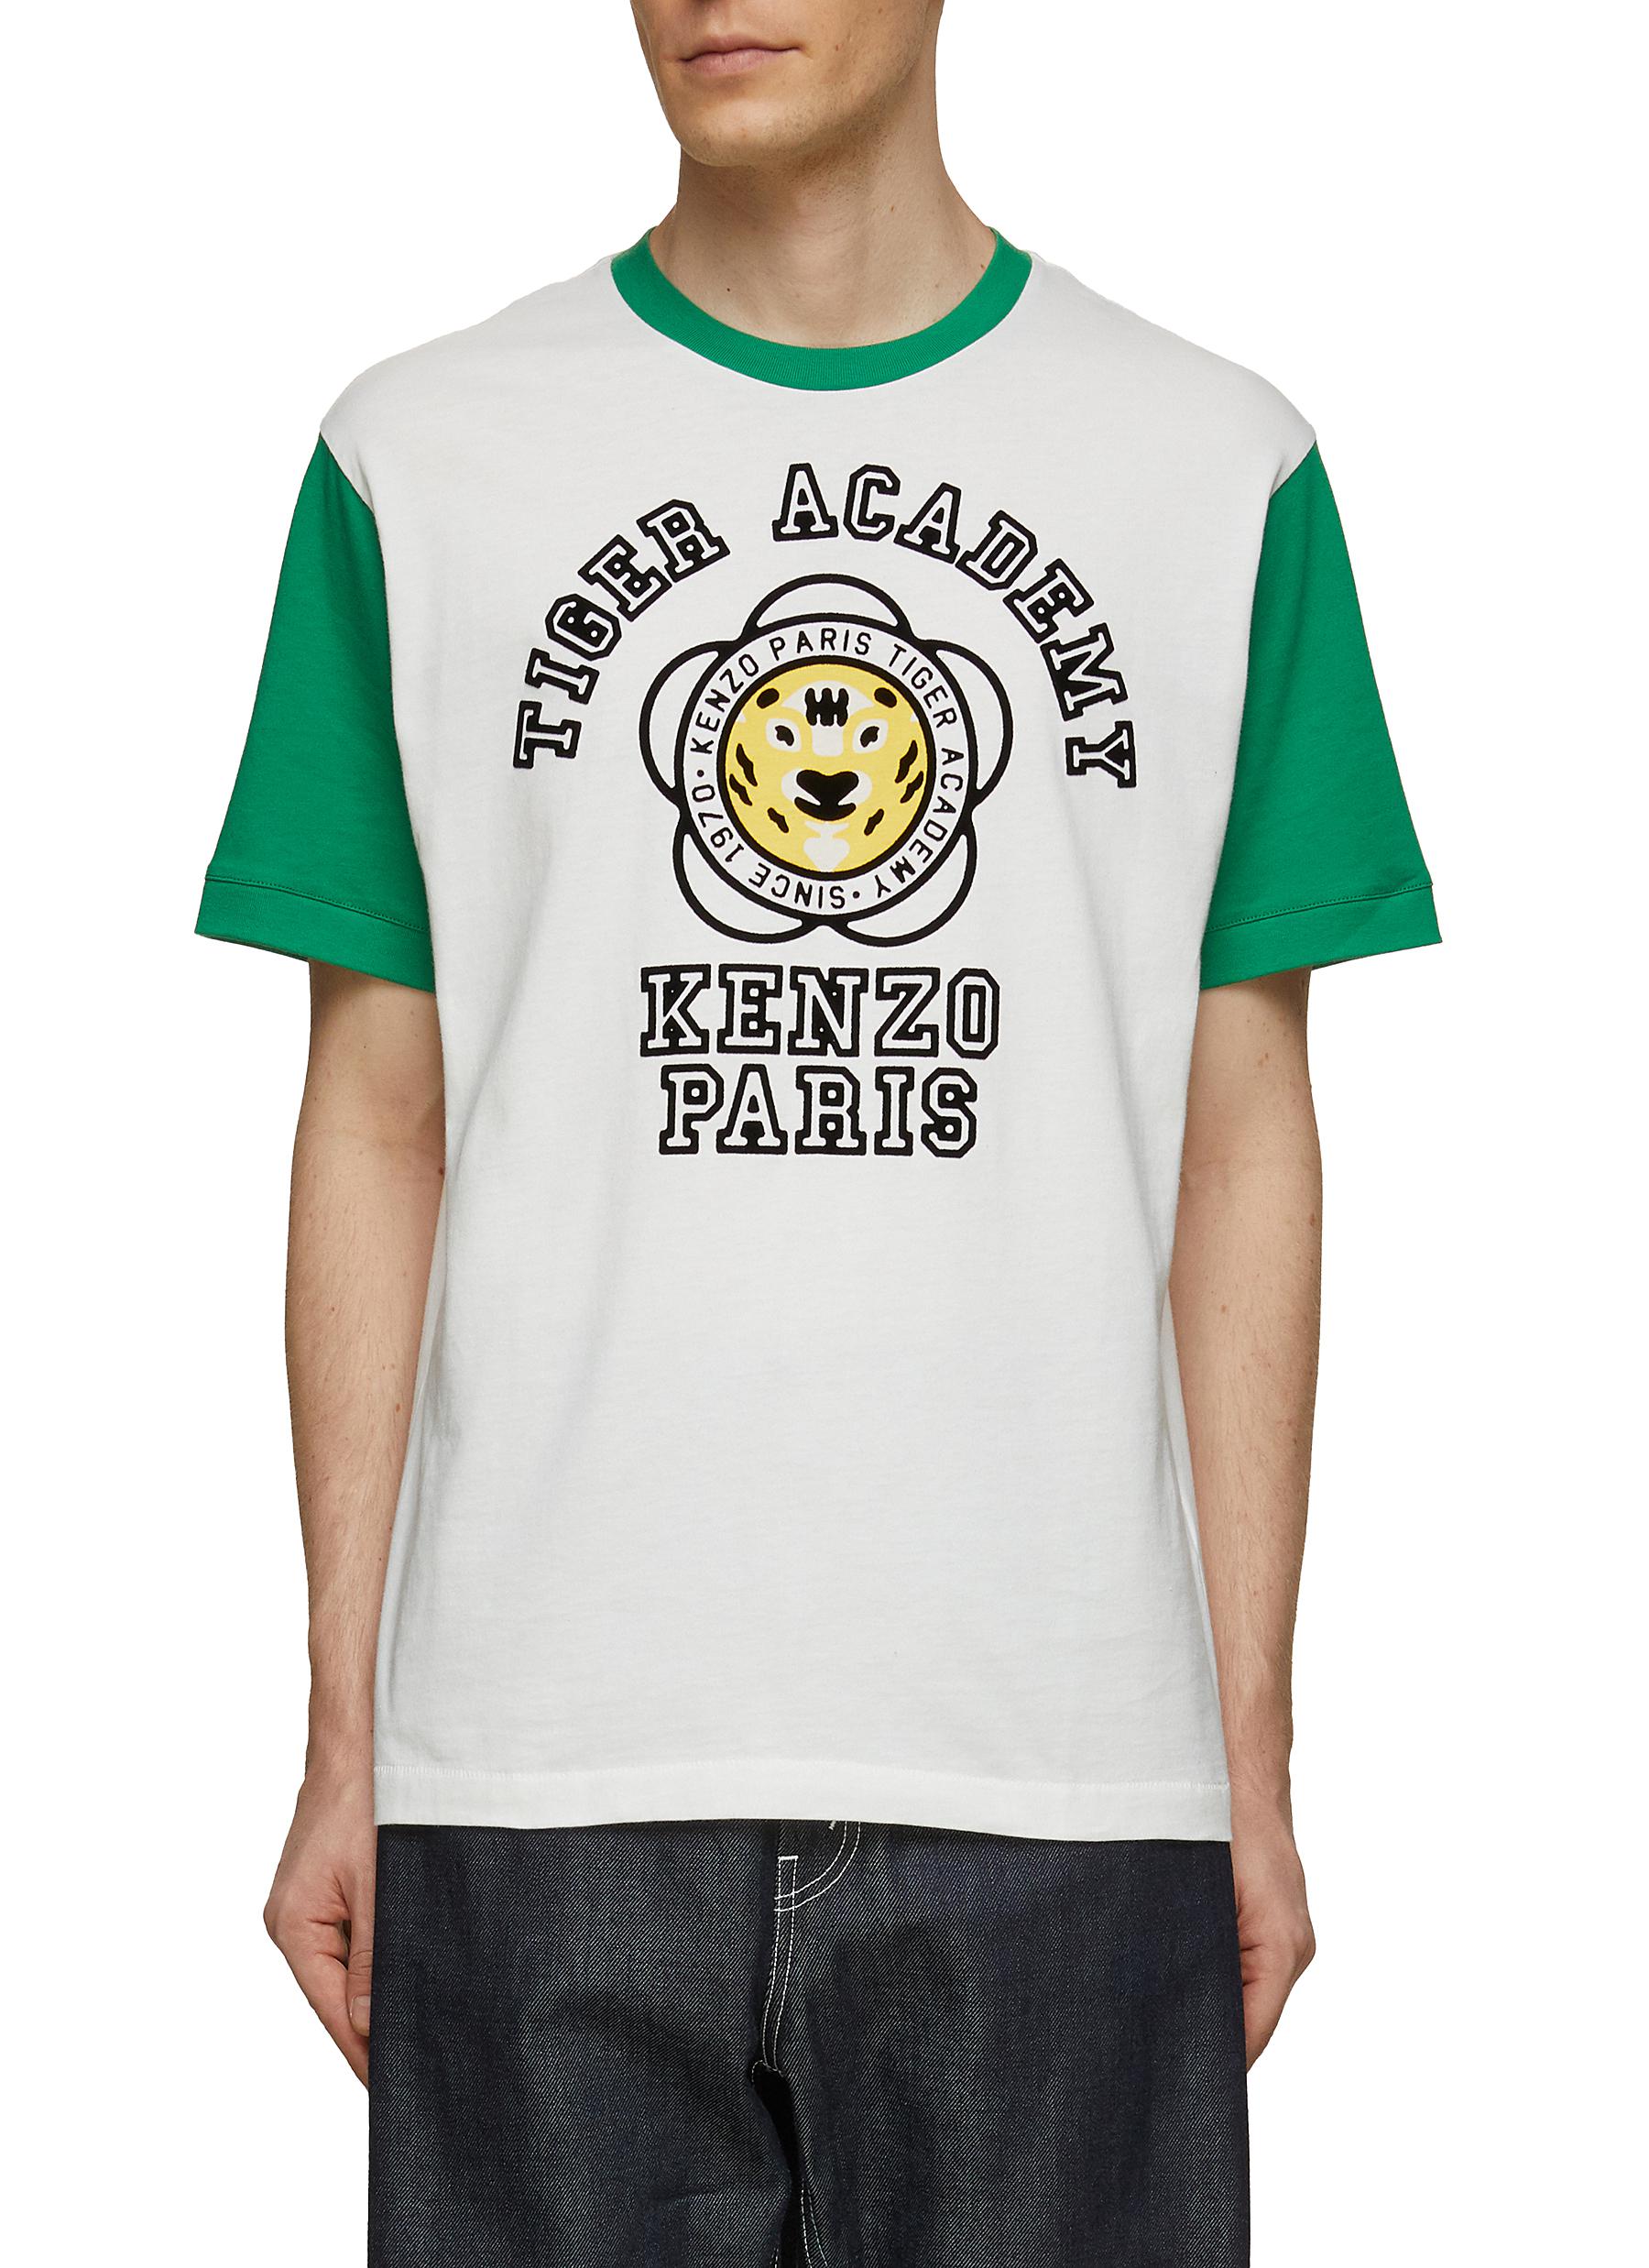 Tiger Academy Print T-Shirt